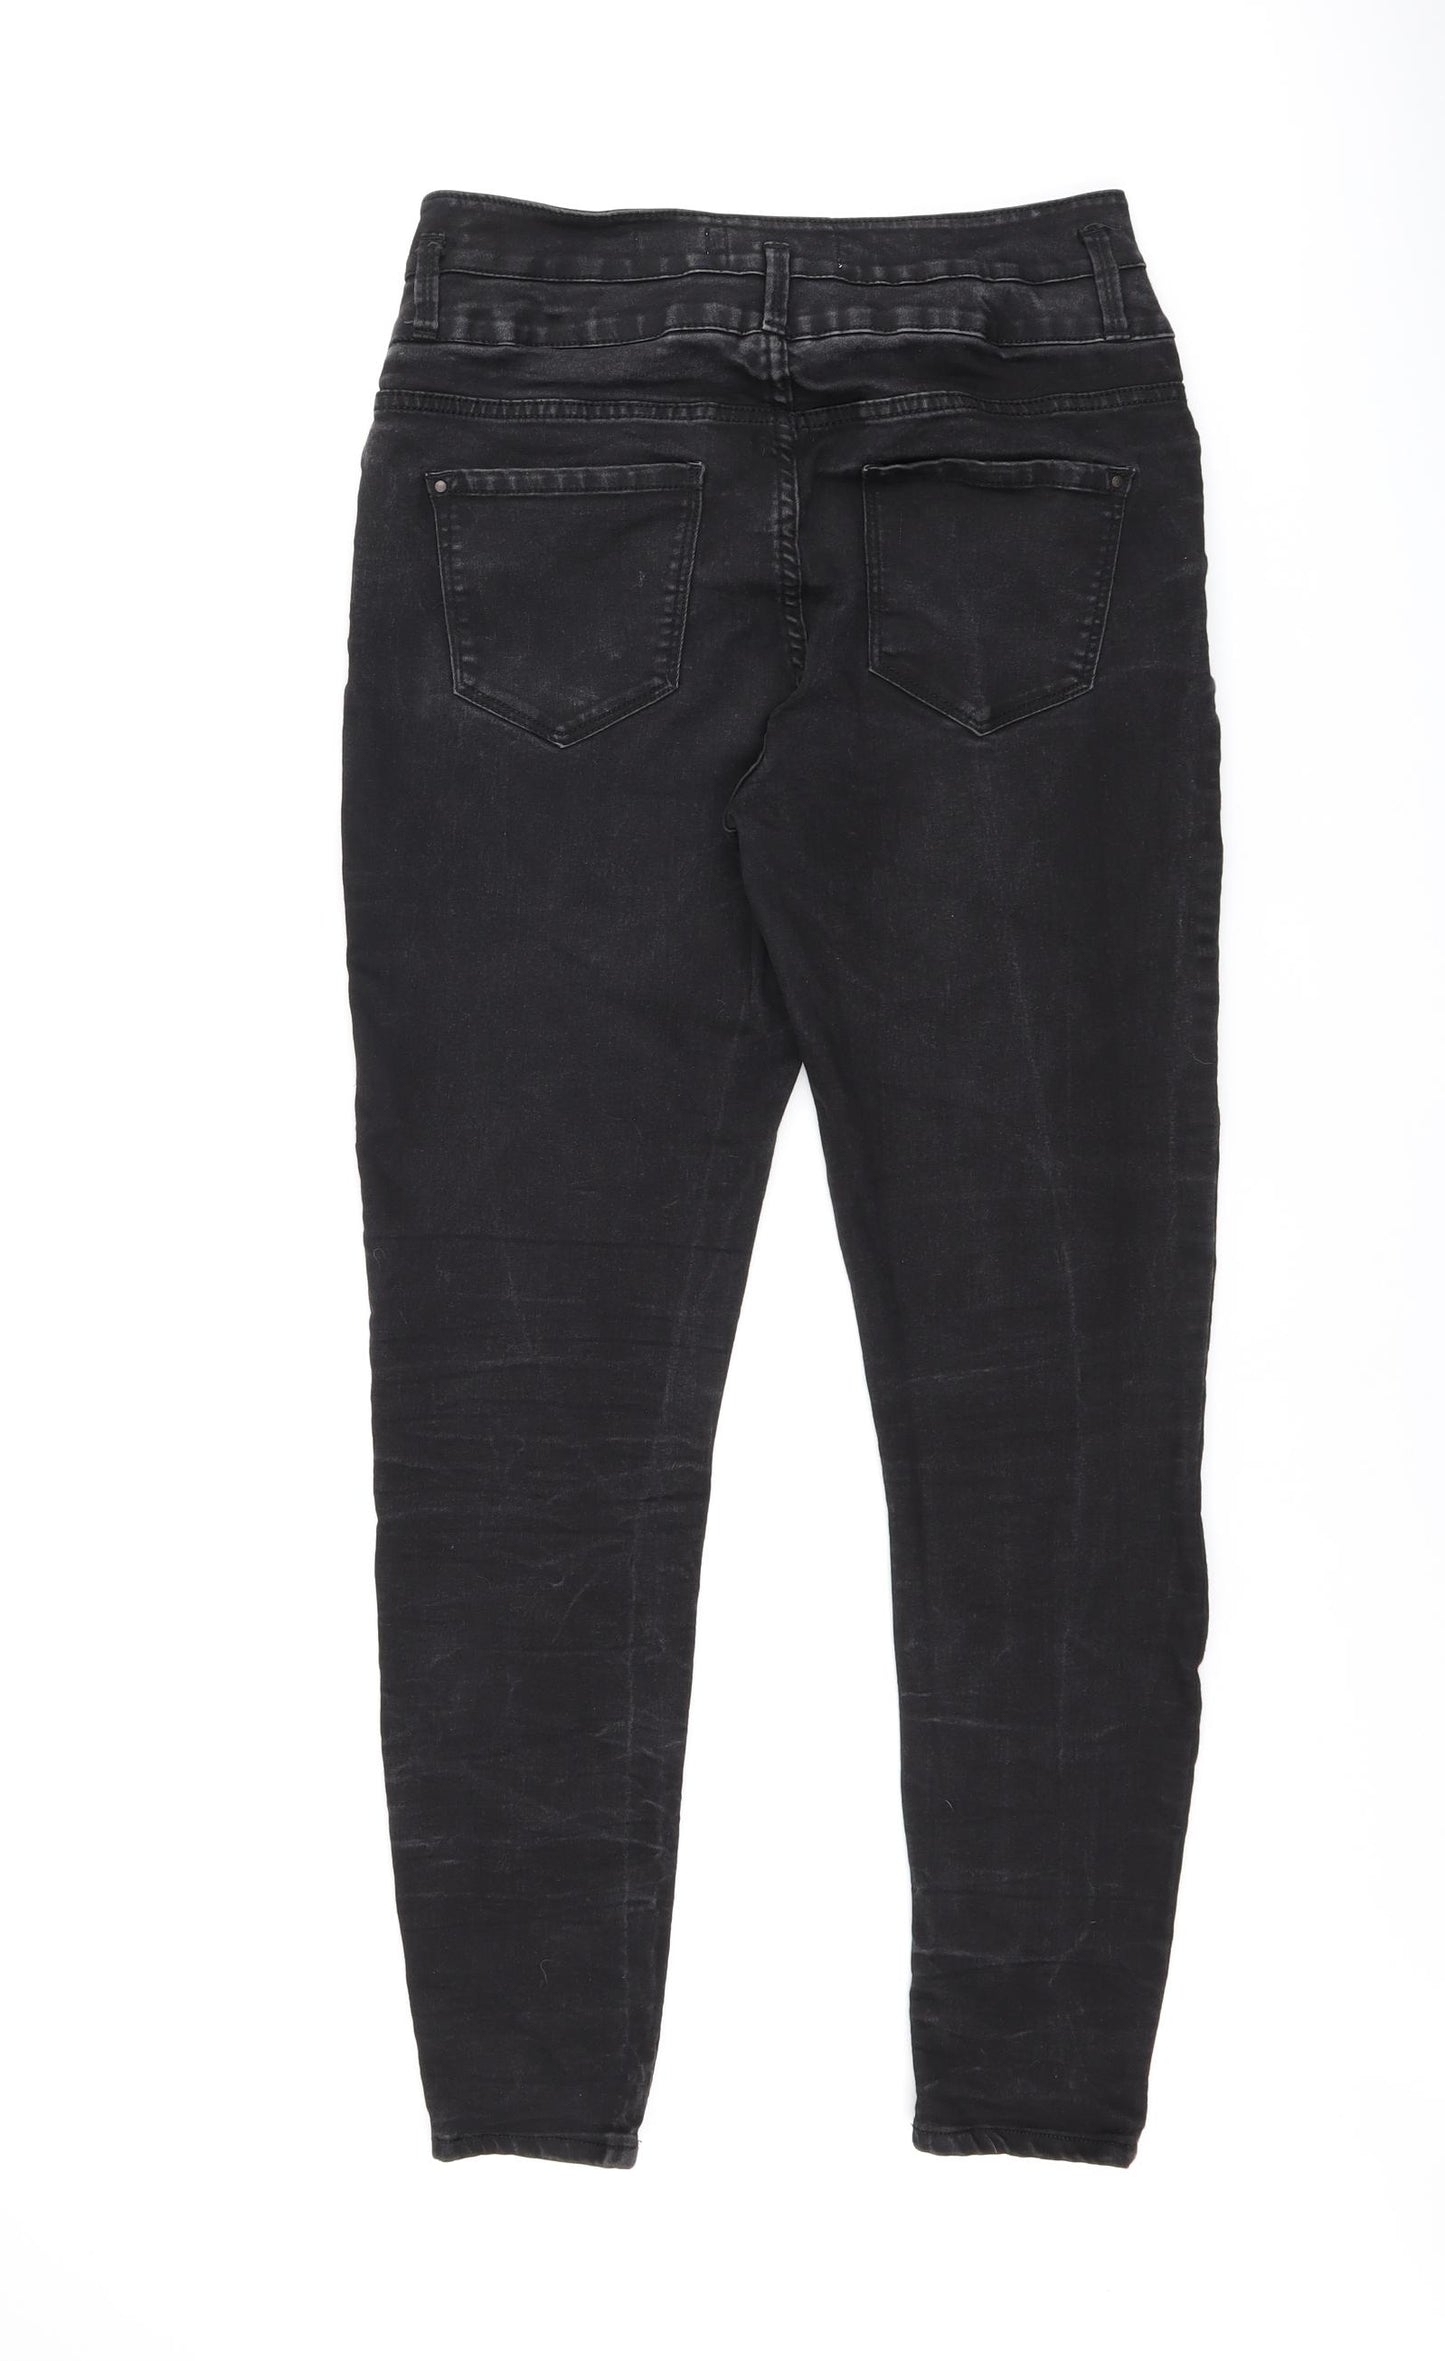 New Look Womens Black Cotton Skinny Jeans Size 14 L26 in Regular Zip